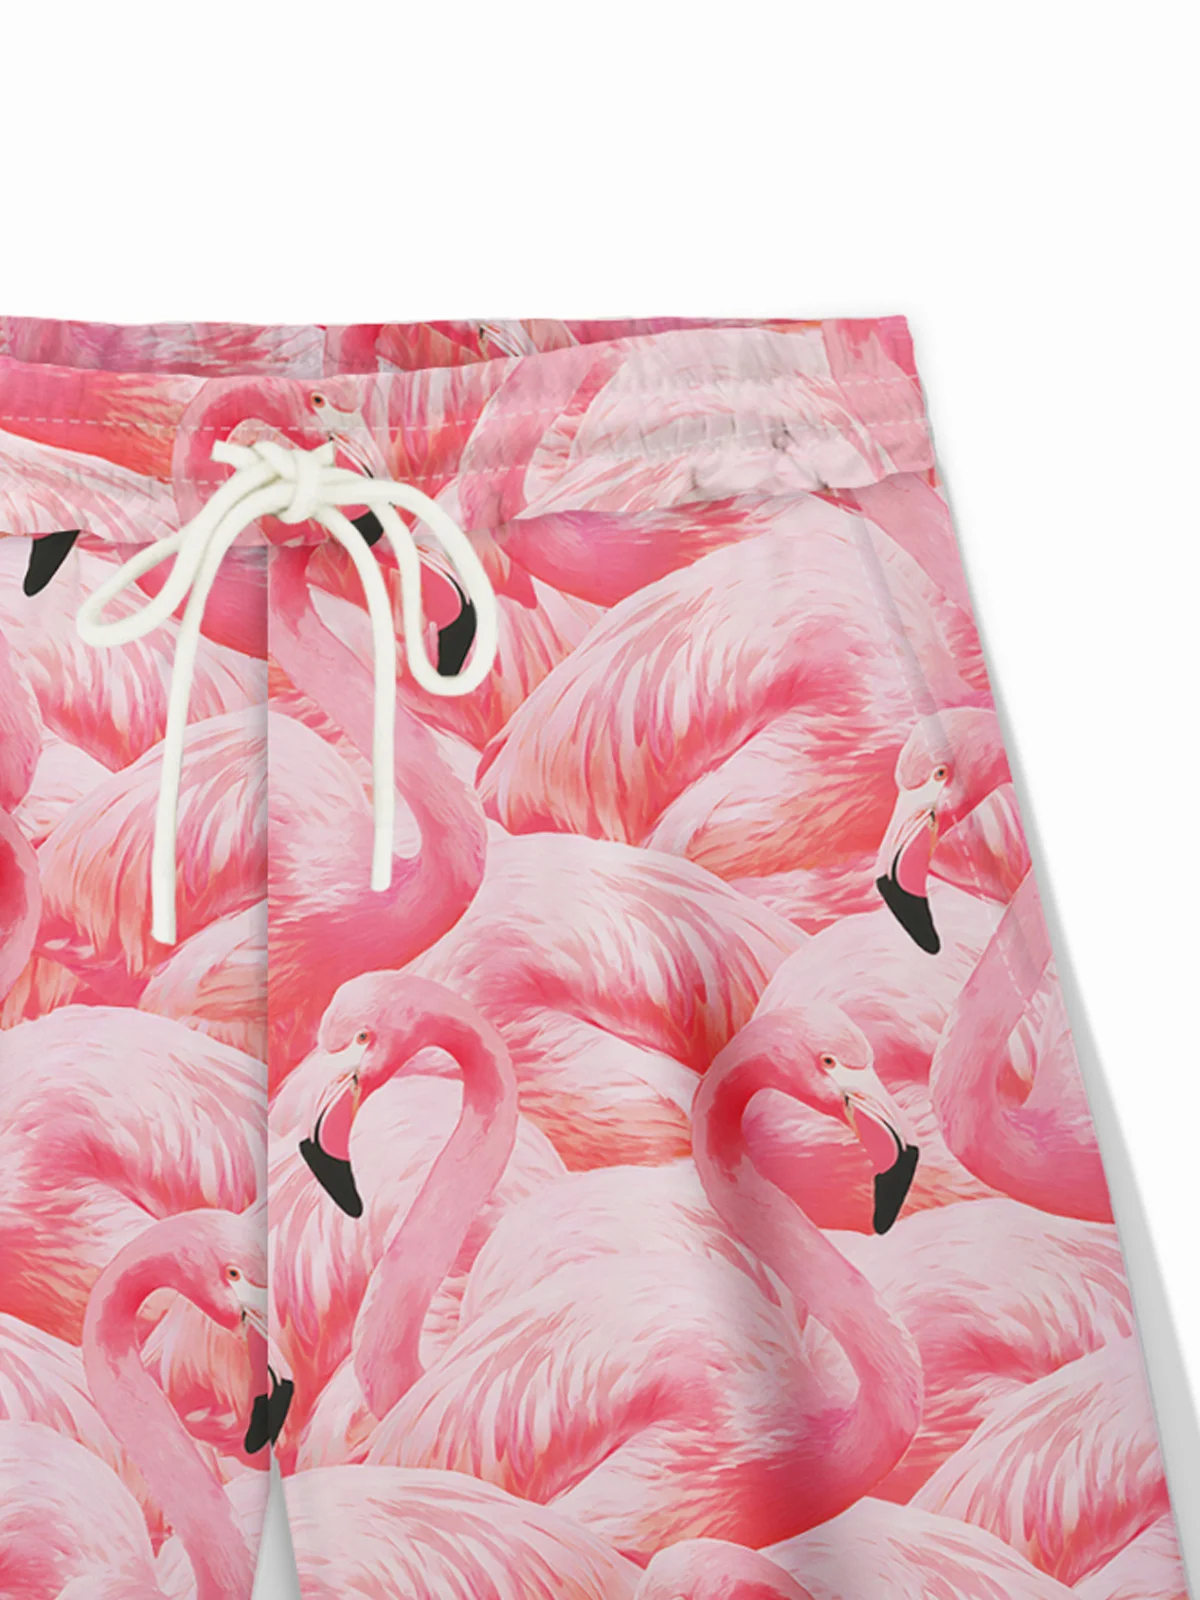 Royaura® Hawaiian Flamingo Print Men's Drawstring Shorts Board Shorts